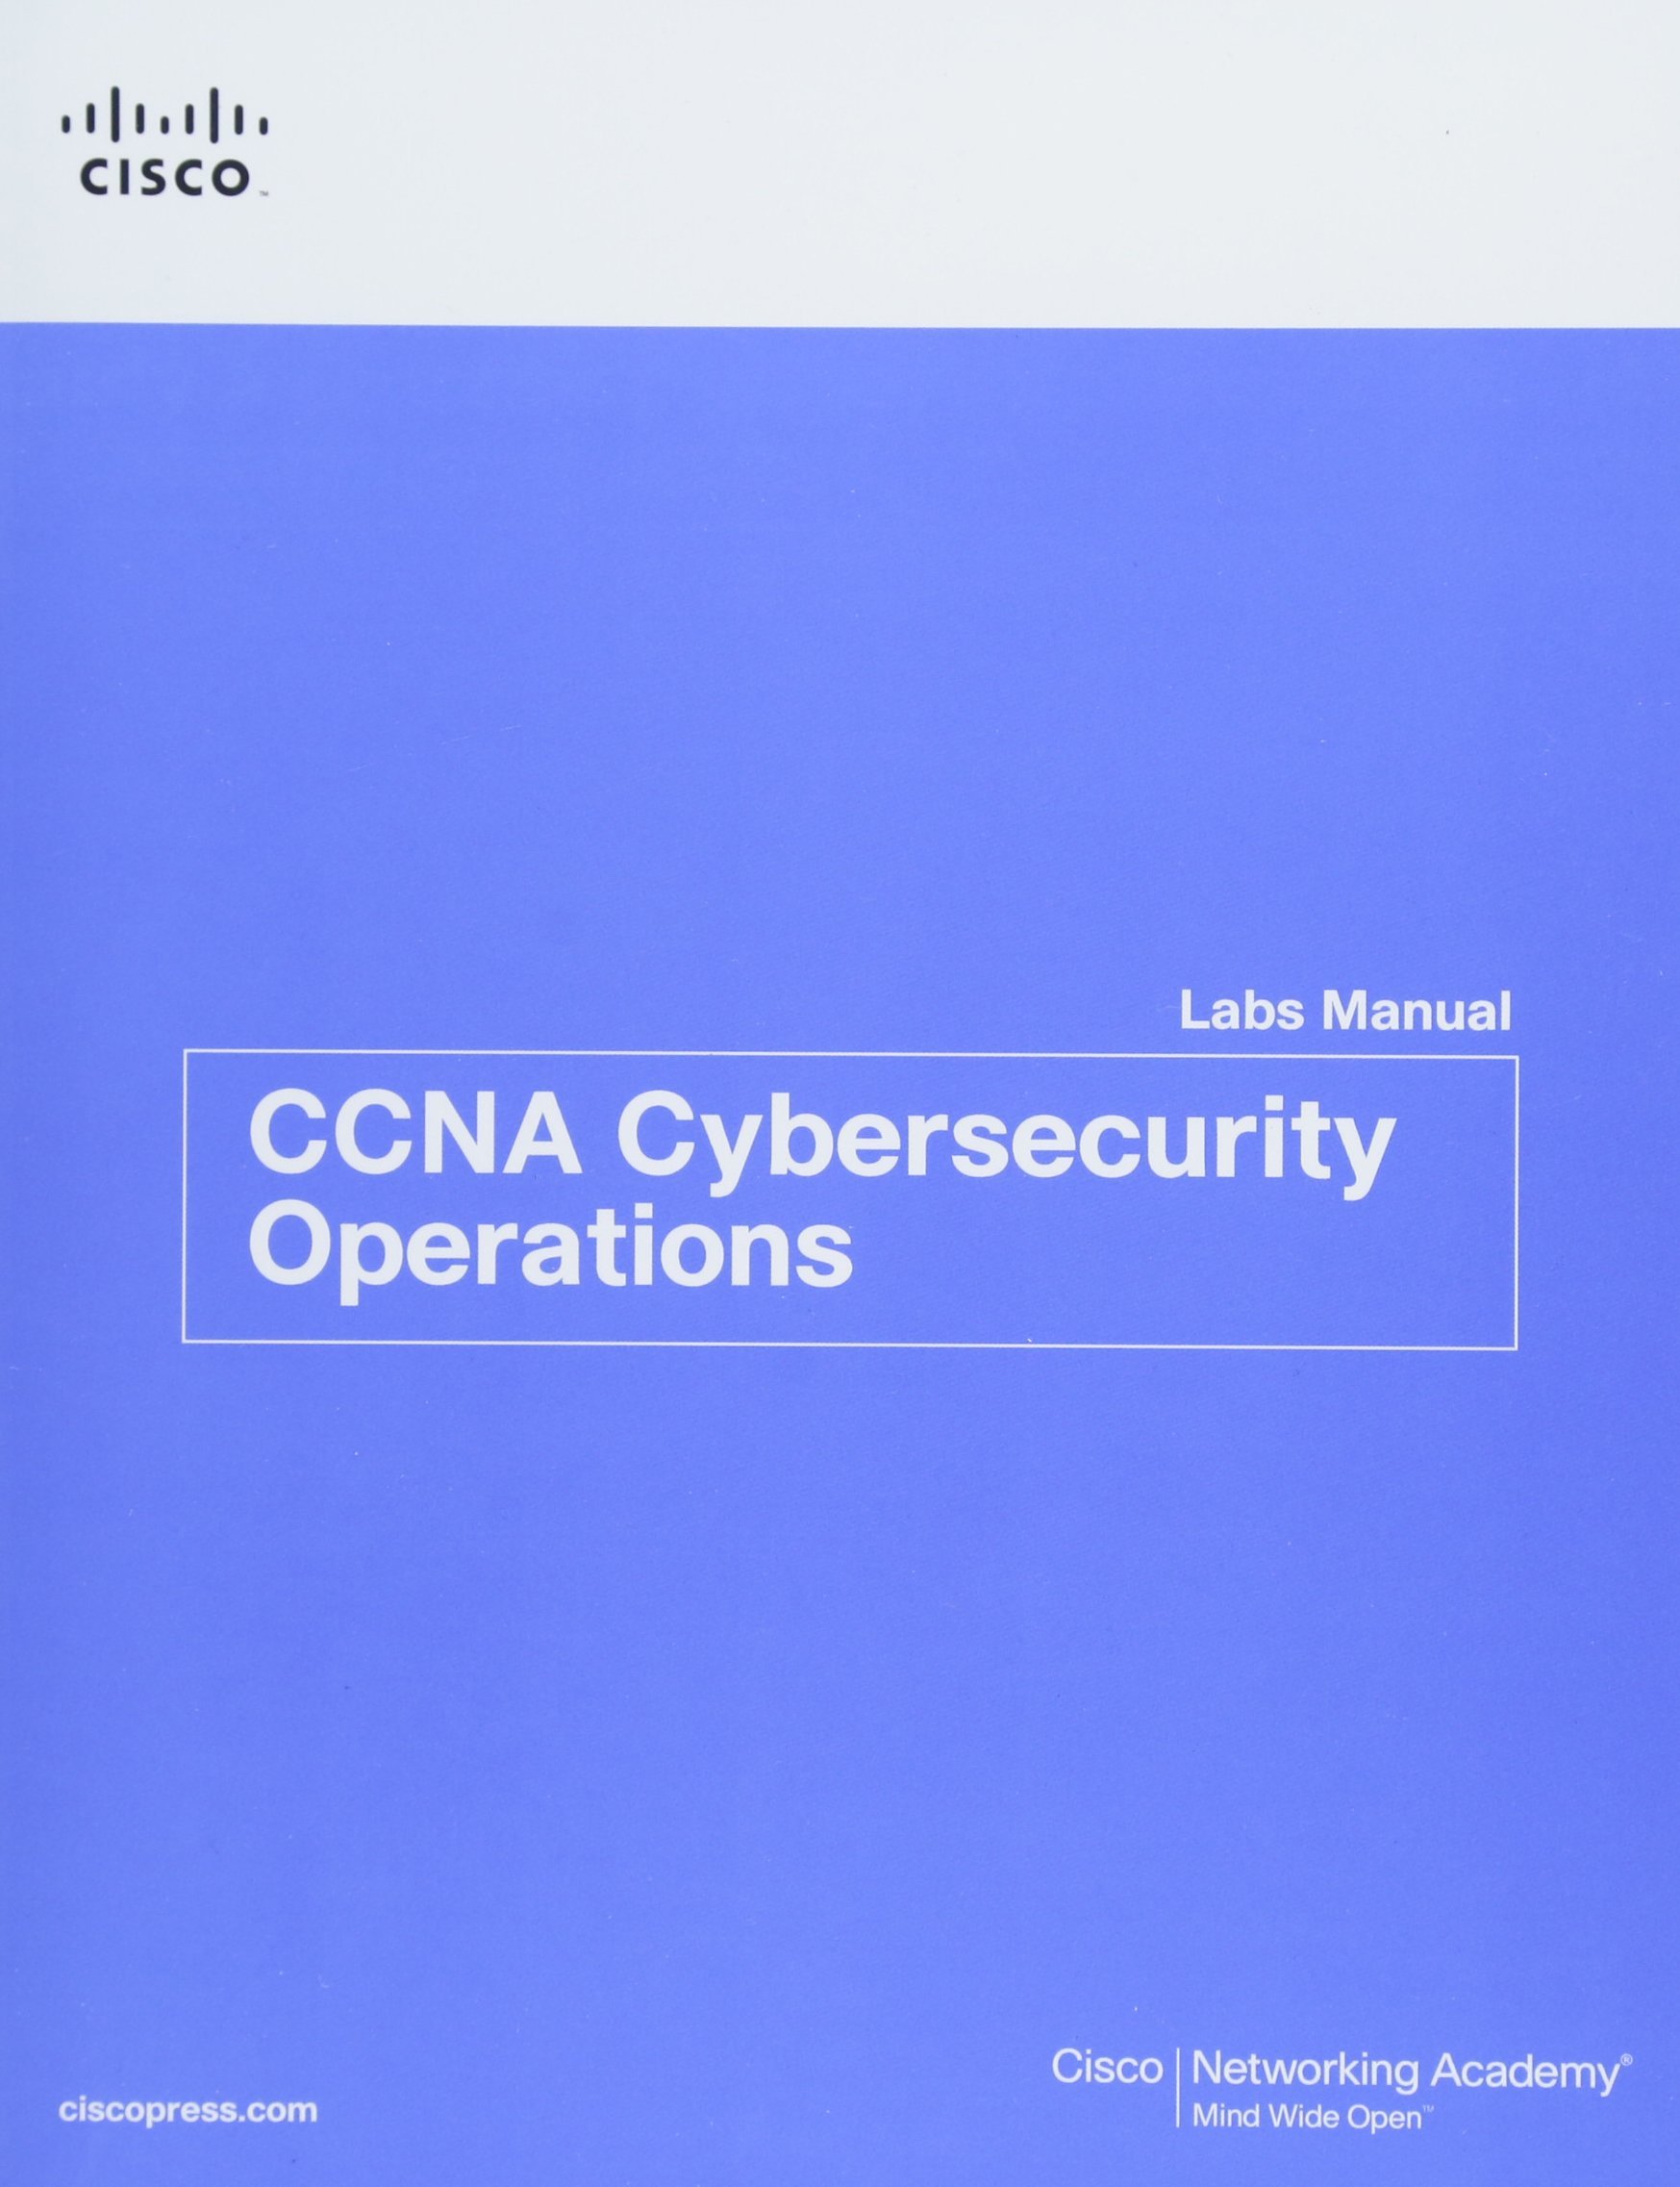 CCNA Cybersecurity Operations Lab Manual (Lab Companion)